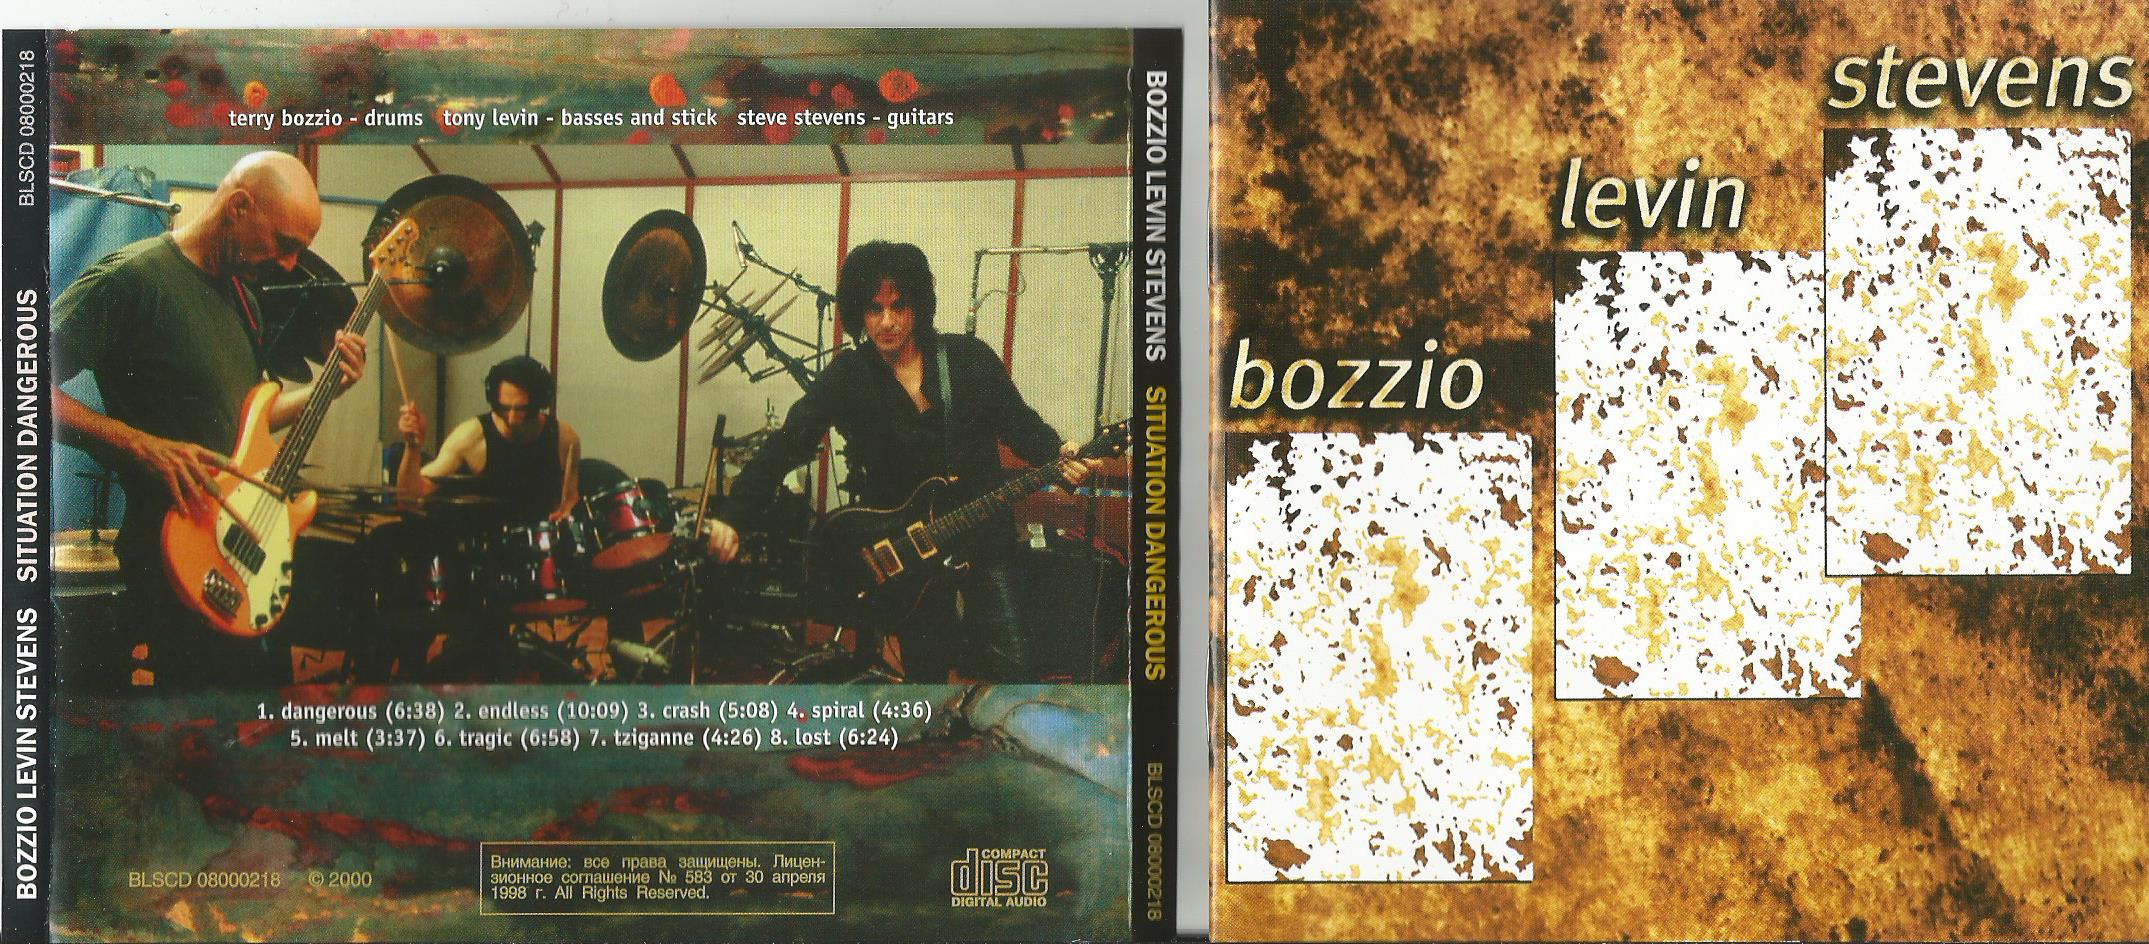 Bozzio levin stevens spiral guitar pro torrent sun ra discography flac torrent